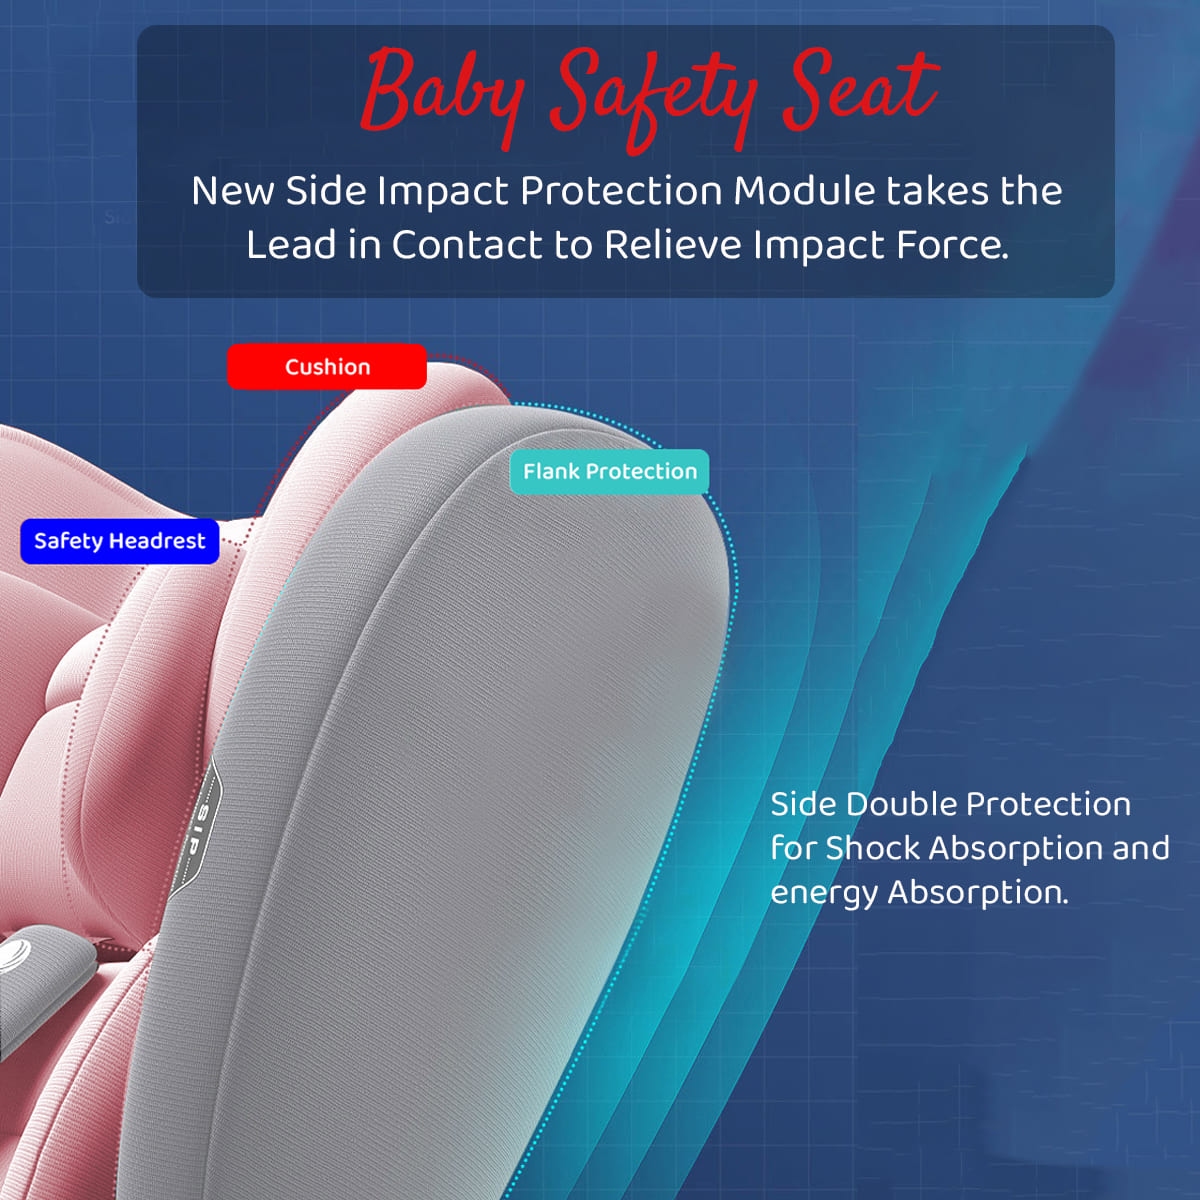 Isofix Baby Car Seat - Buy Infant Car Seat at StarAndDaisy